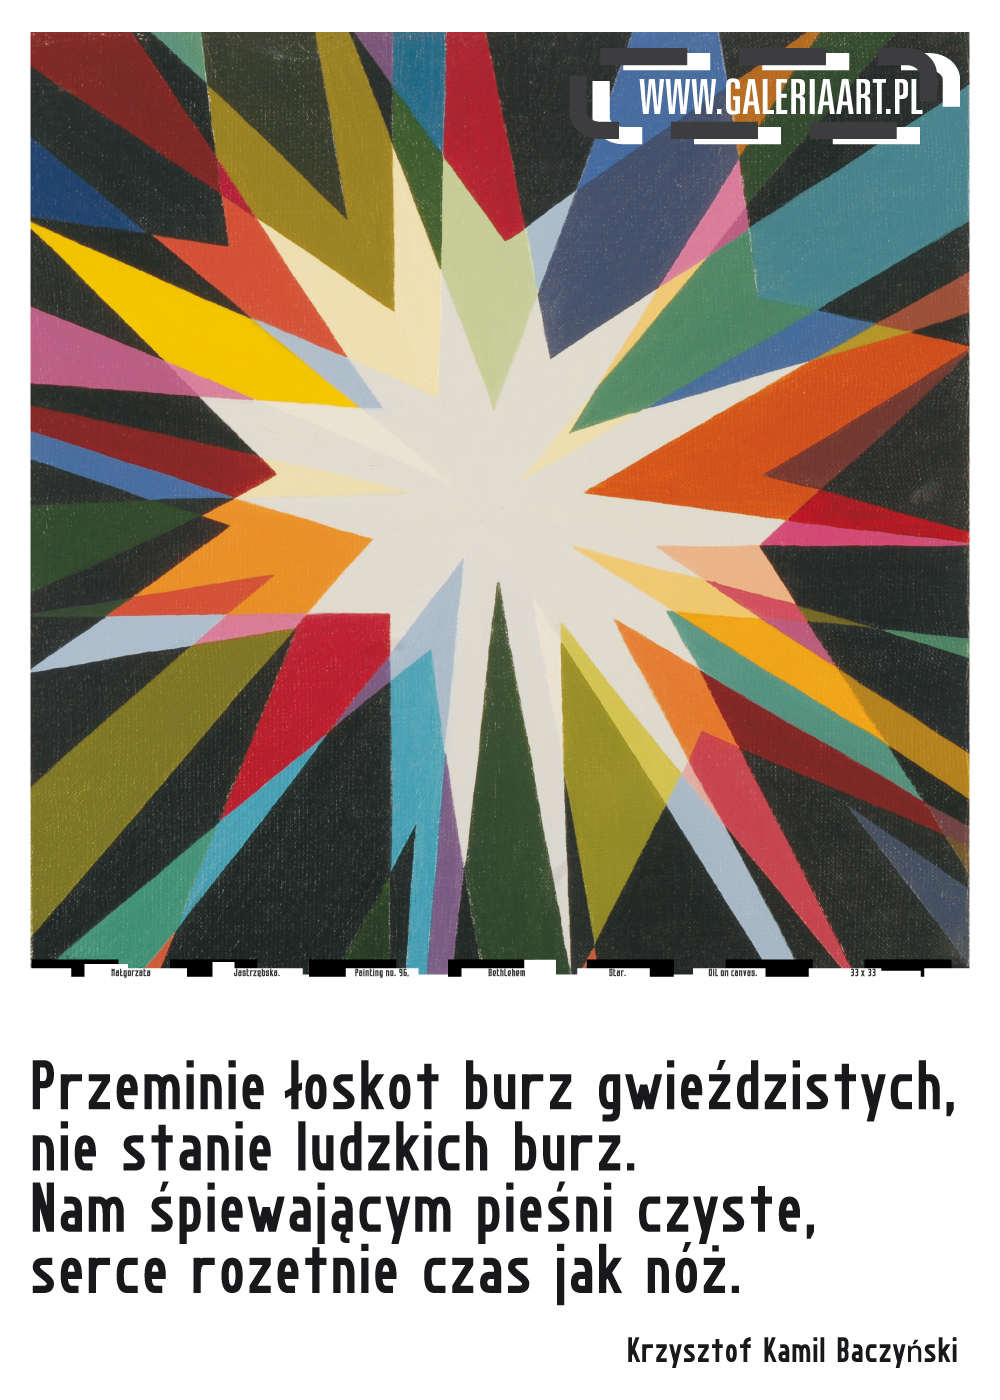 Małgorzata Jastrzębska. On The Revolutions of Colours